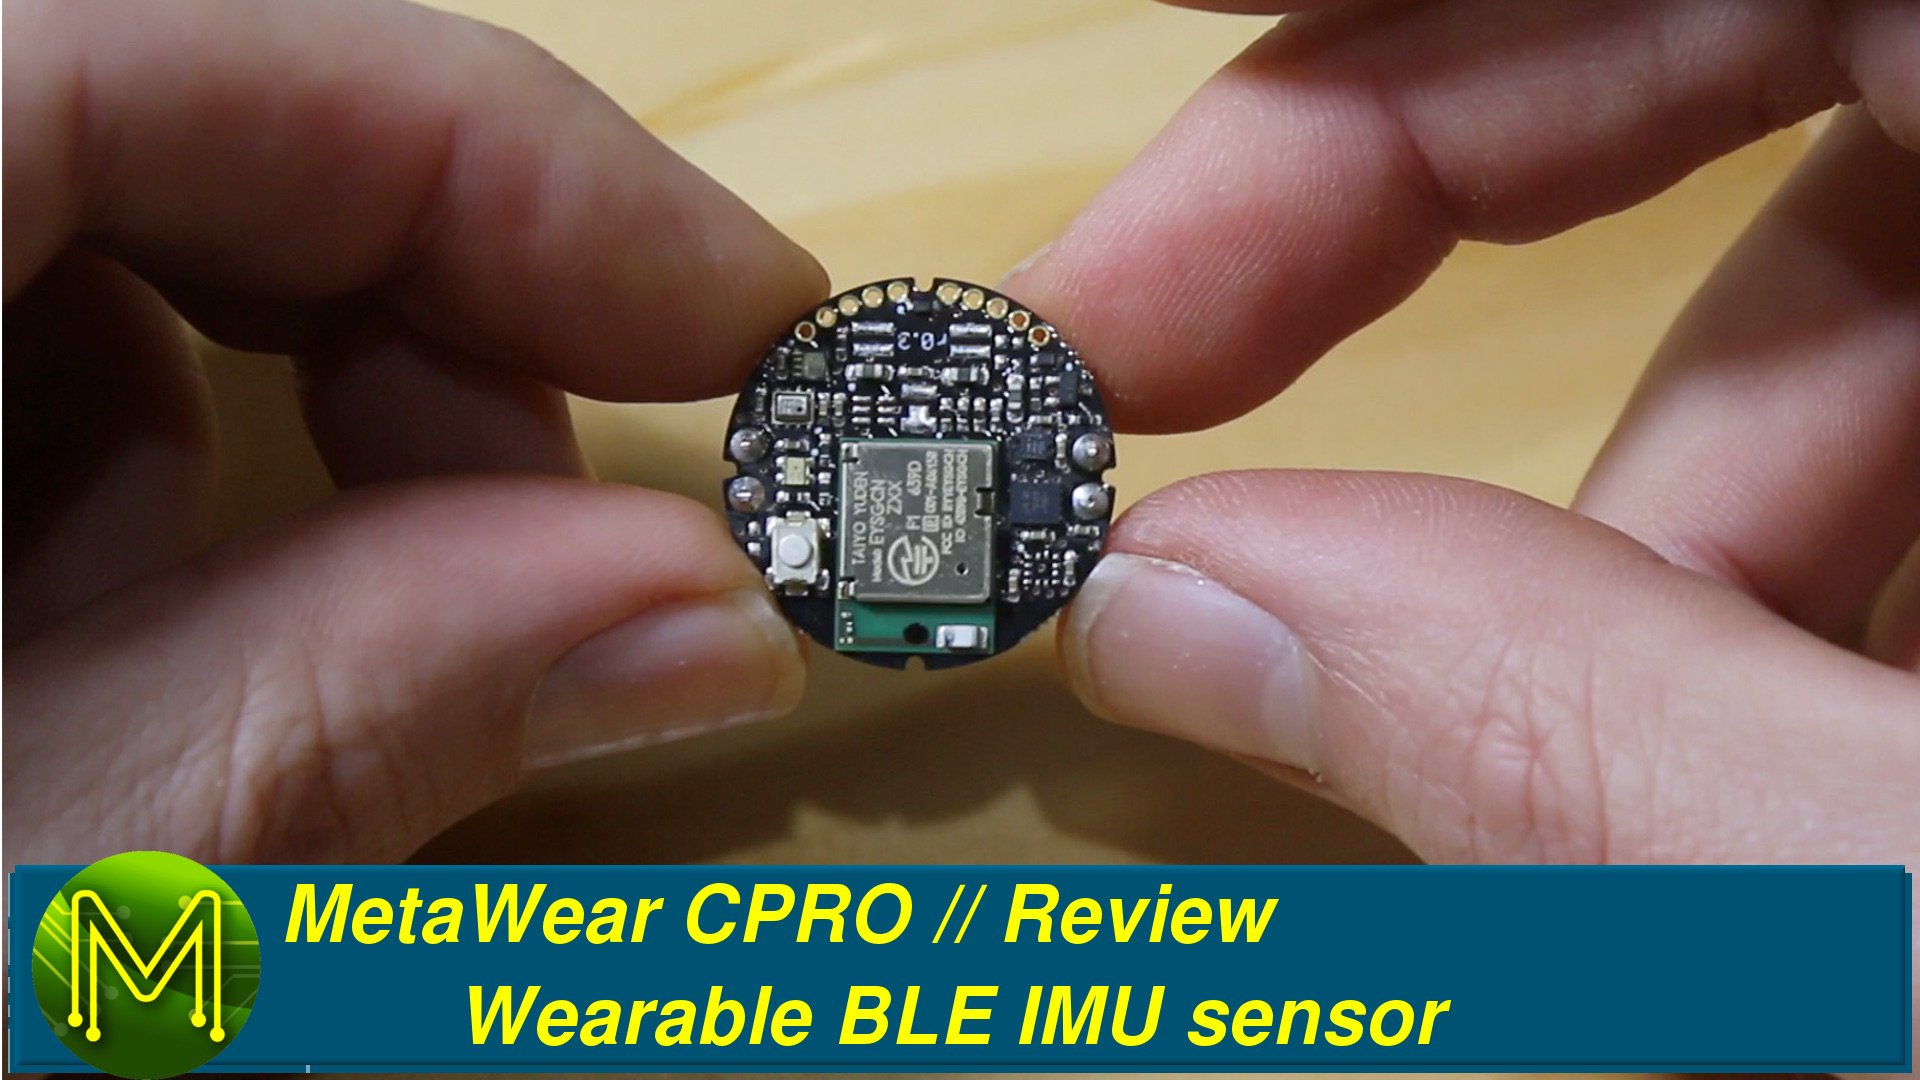 MetaWear CPRO: Wearable BLE IMU sensor // Review